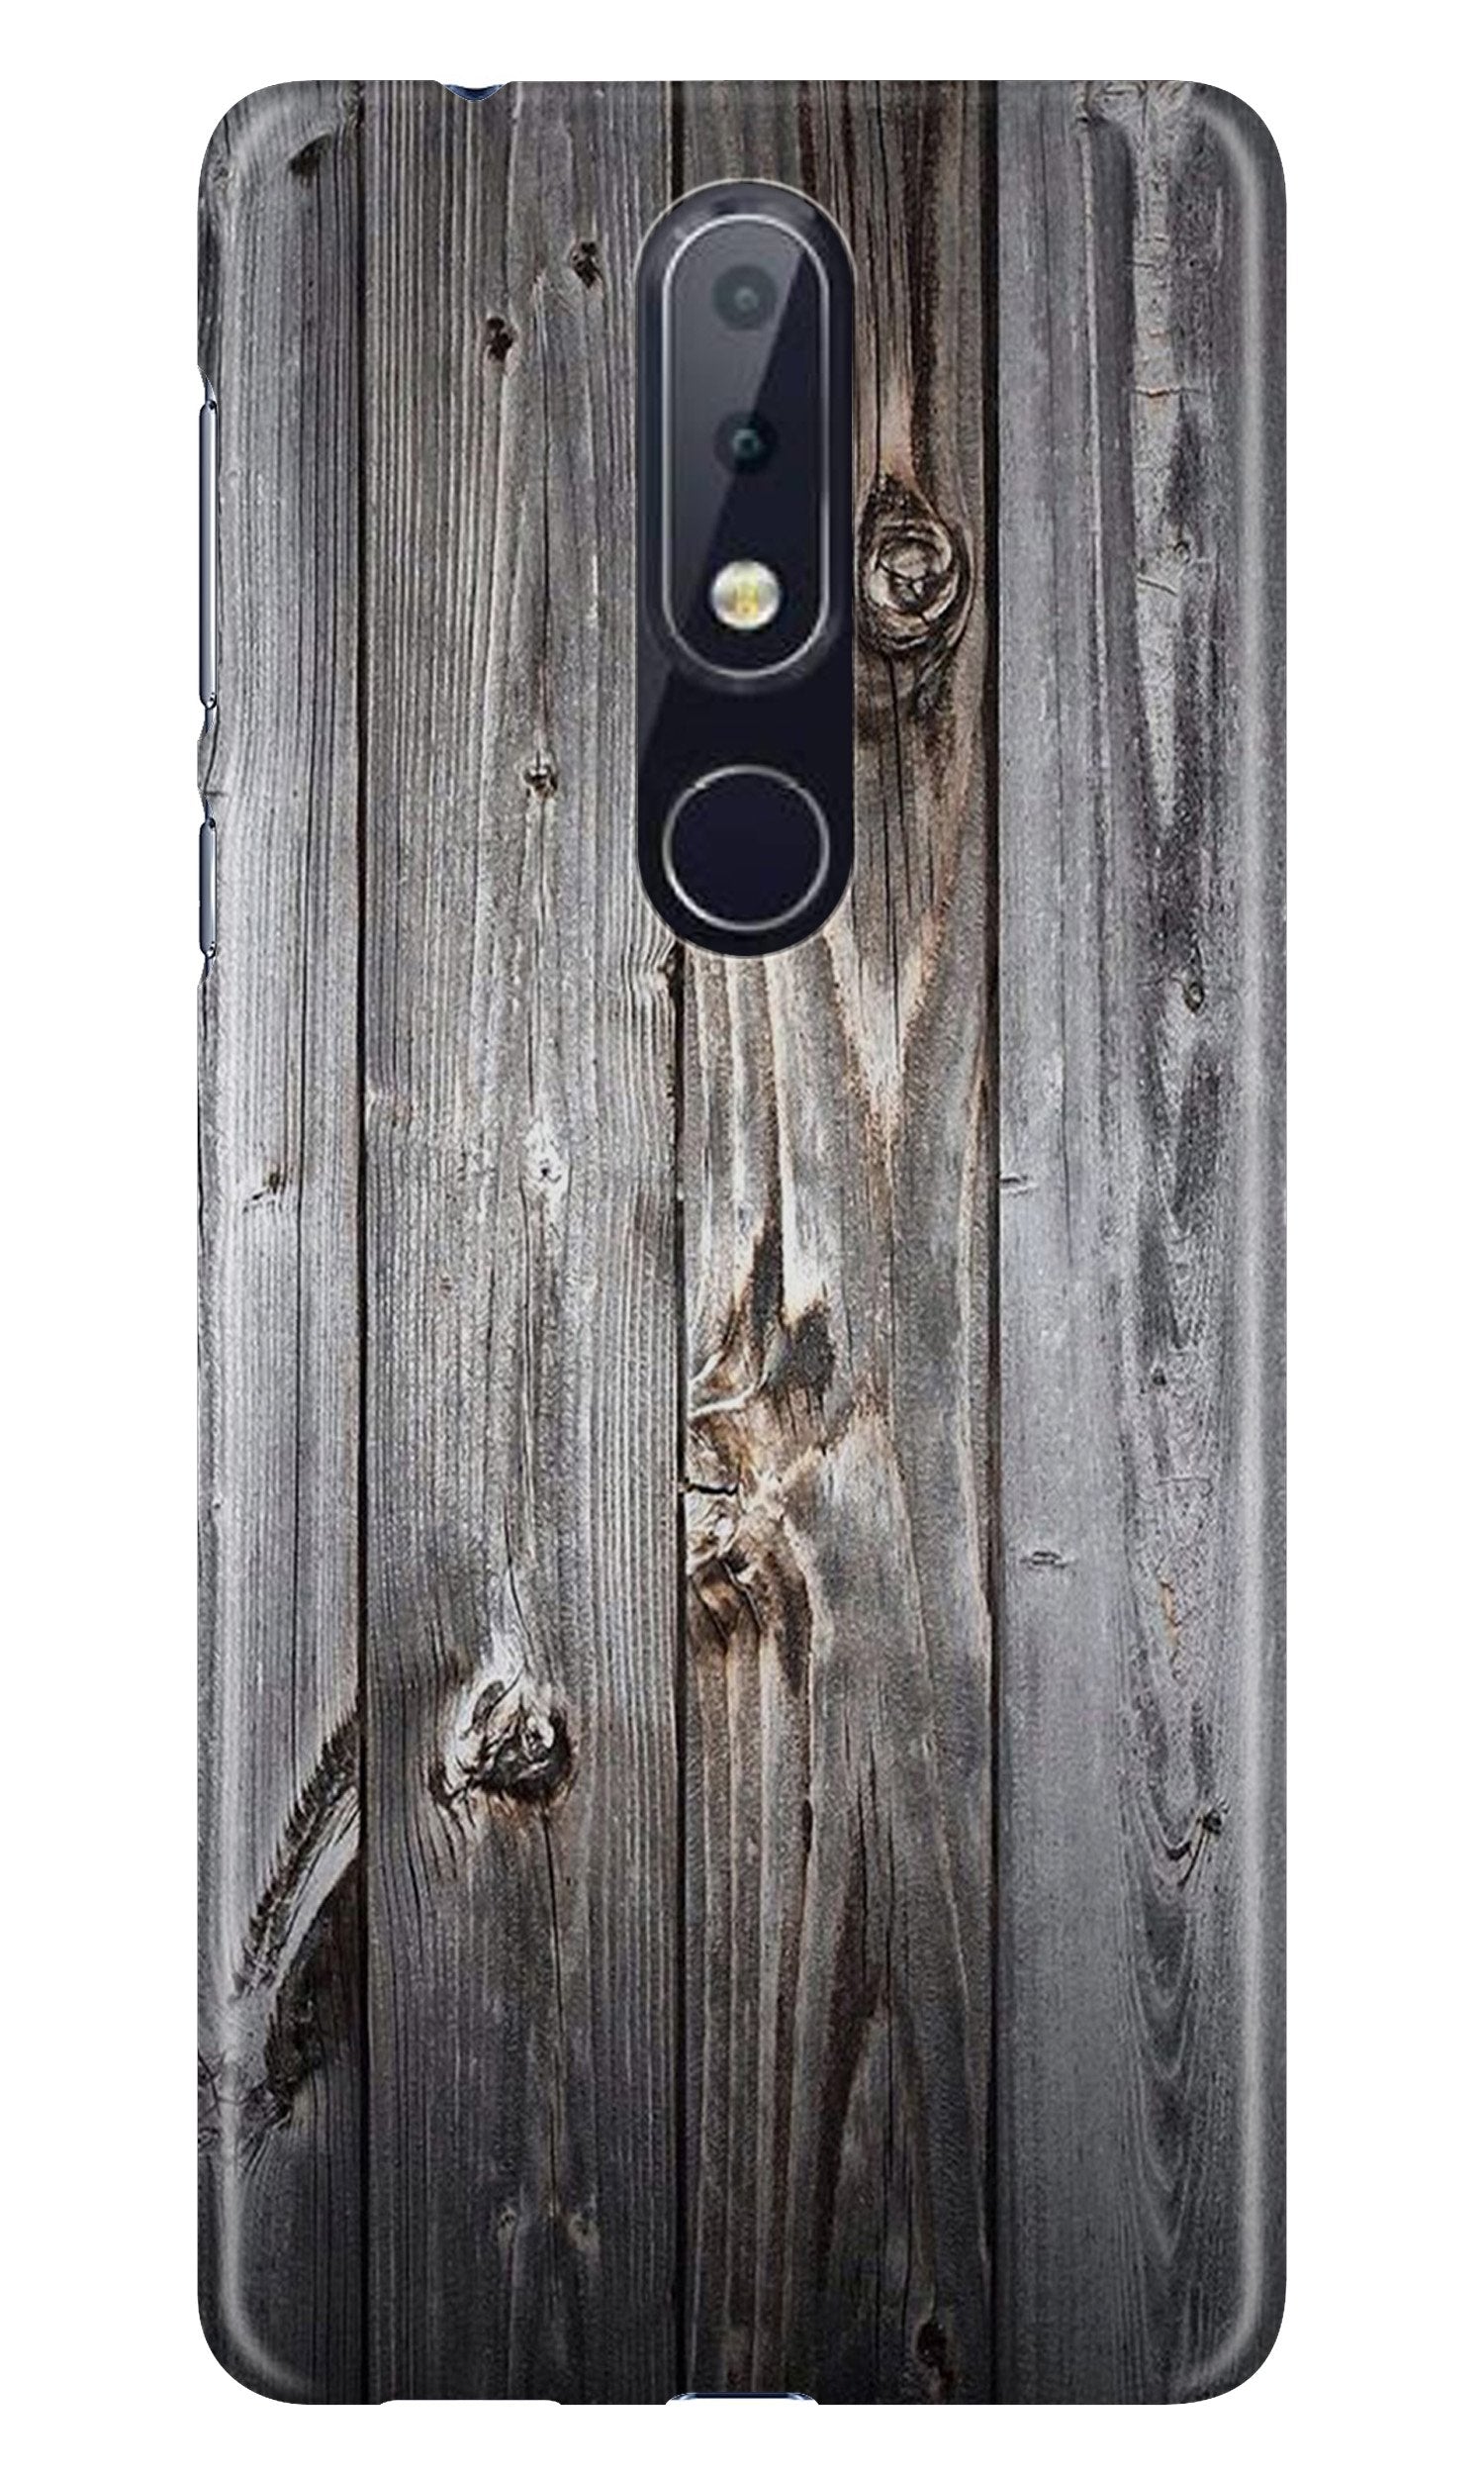 Wooden Look Case for Nokia 7.1(Design - 114)